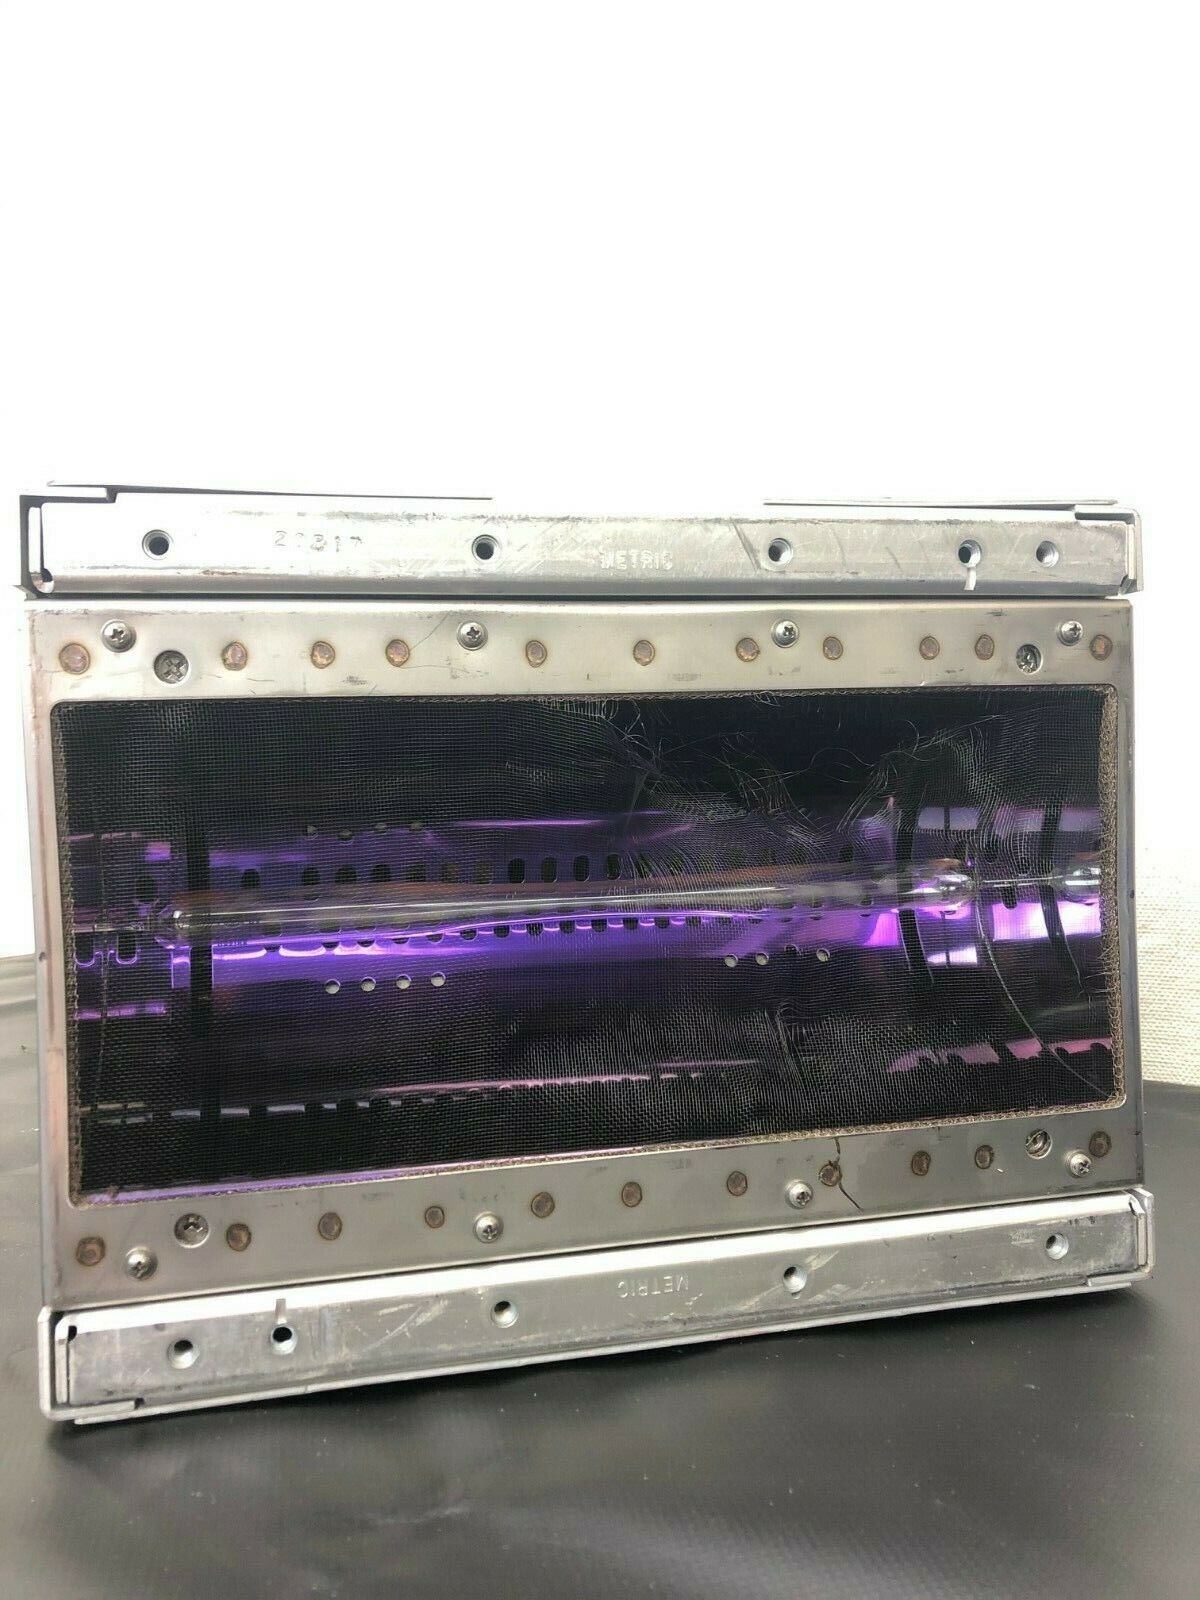 Fusion UV Light Hammer Irradiator LH10 Fusion UV Systems, Inc. Does Not Apply - фотография #5